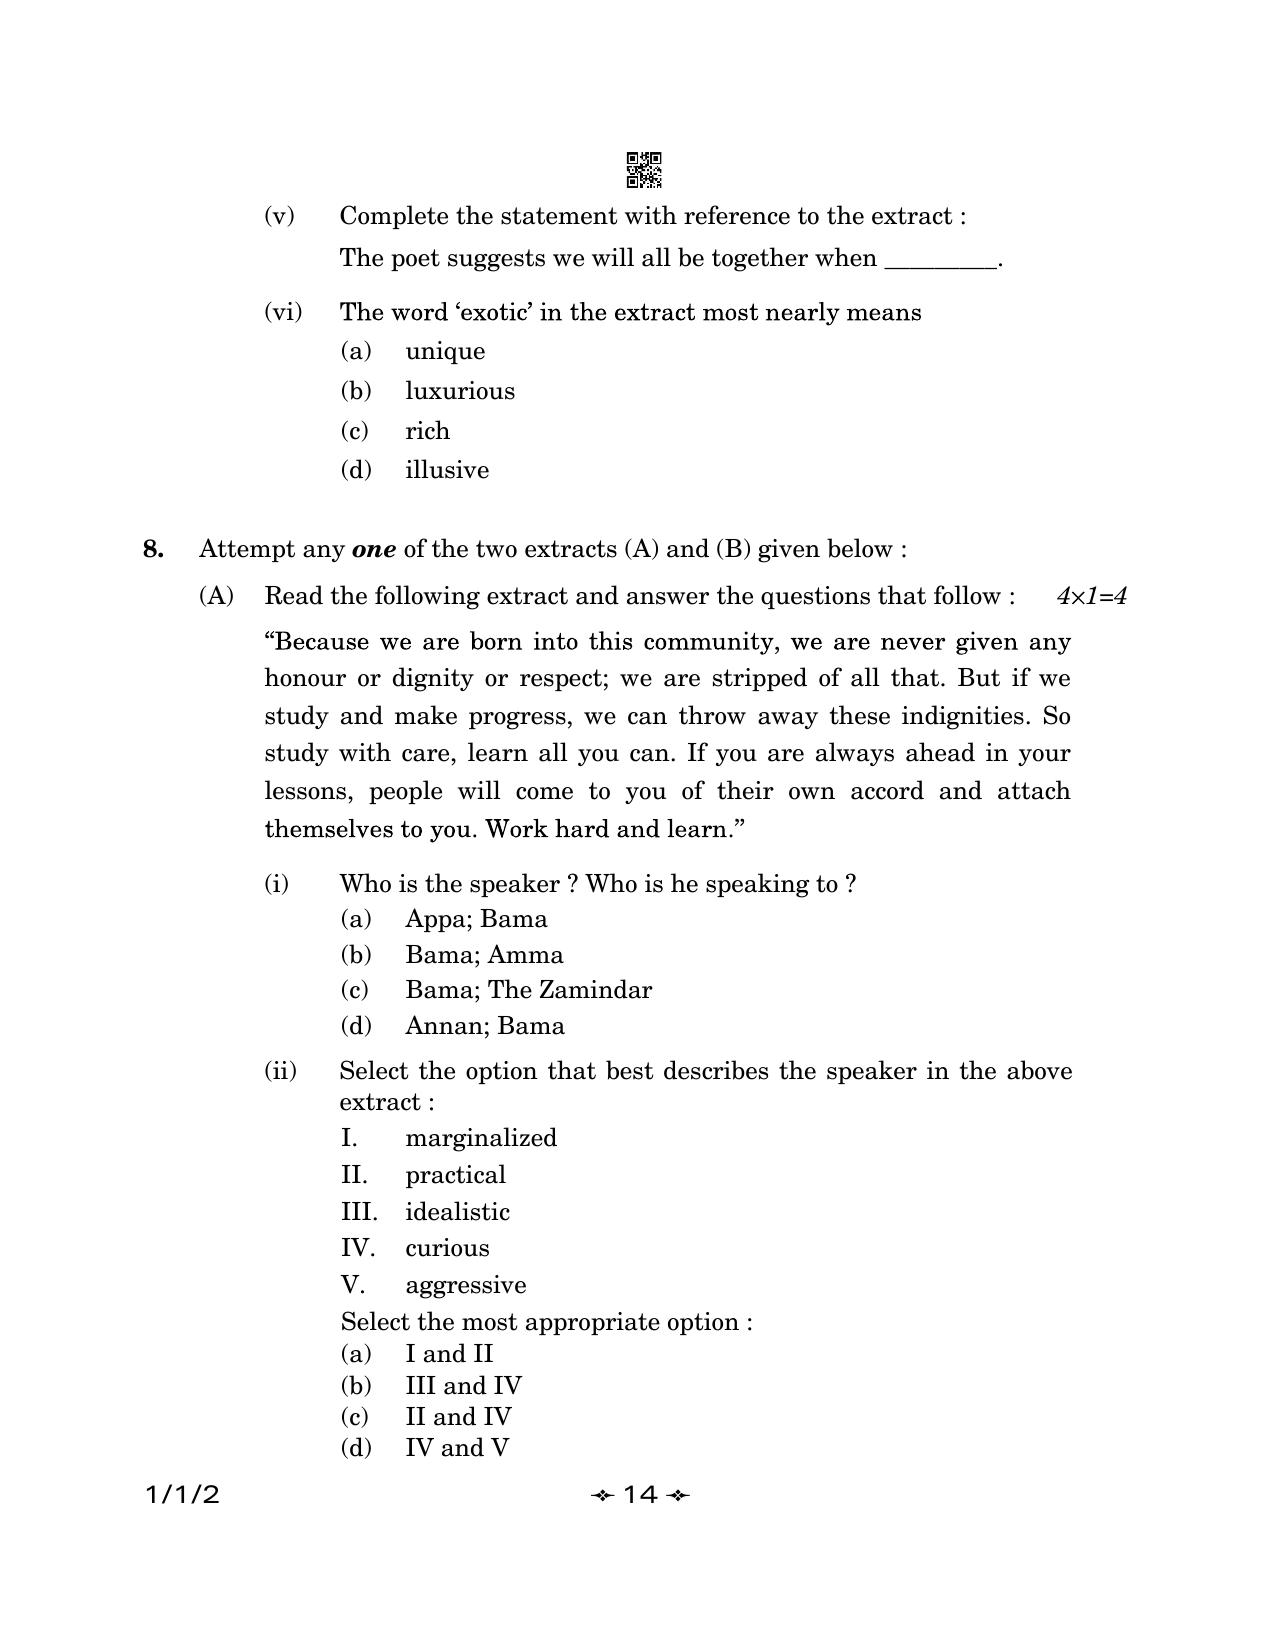 CBSE Class 12 1-1-2 English Core 2023 Question Paper - Page 14